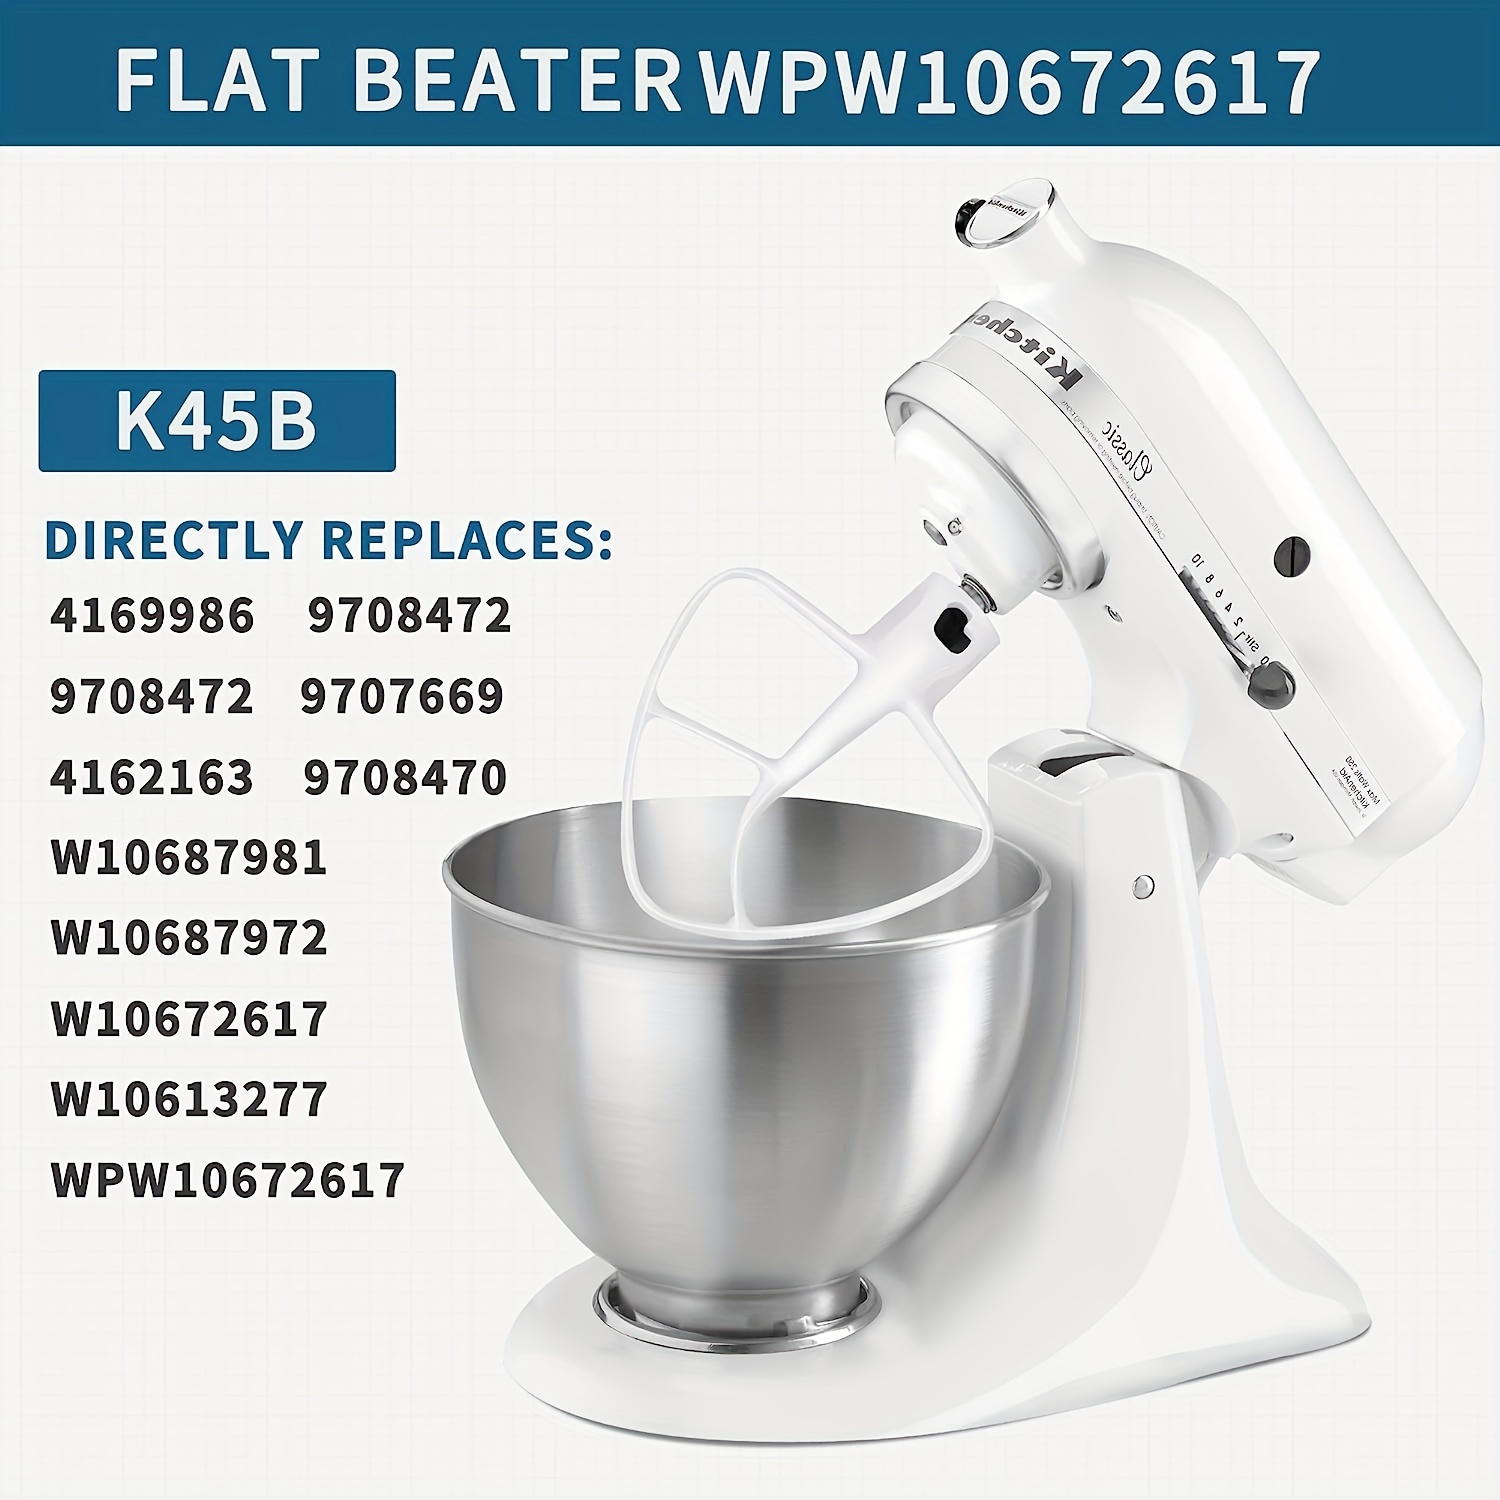 KitchenAid K45B Coated Flat Beater, White, 4.5 Qt